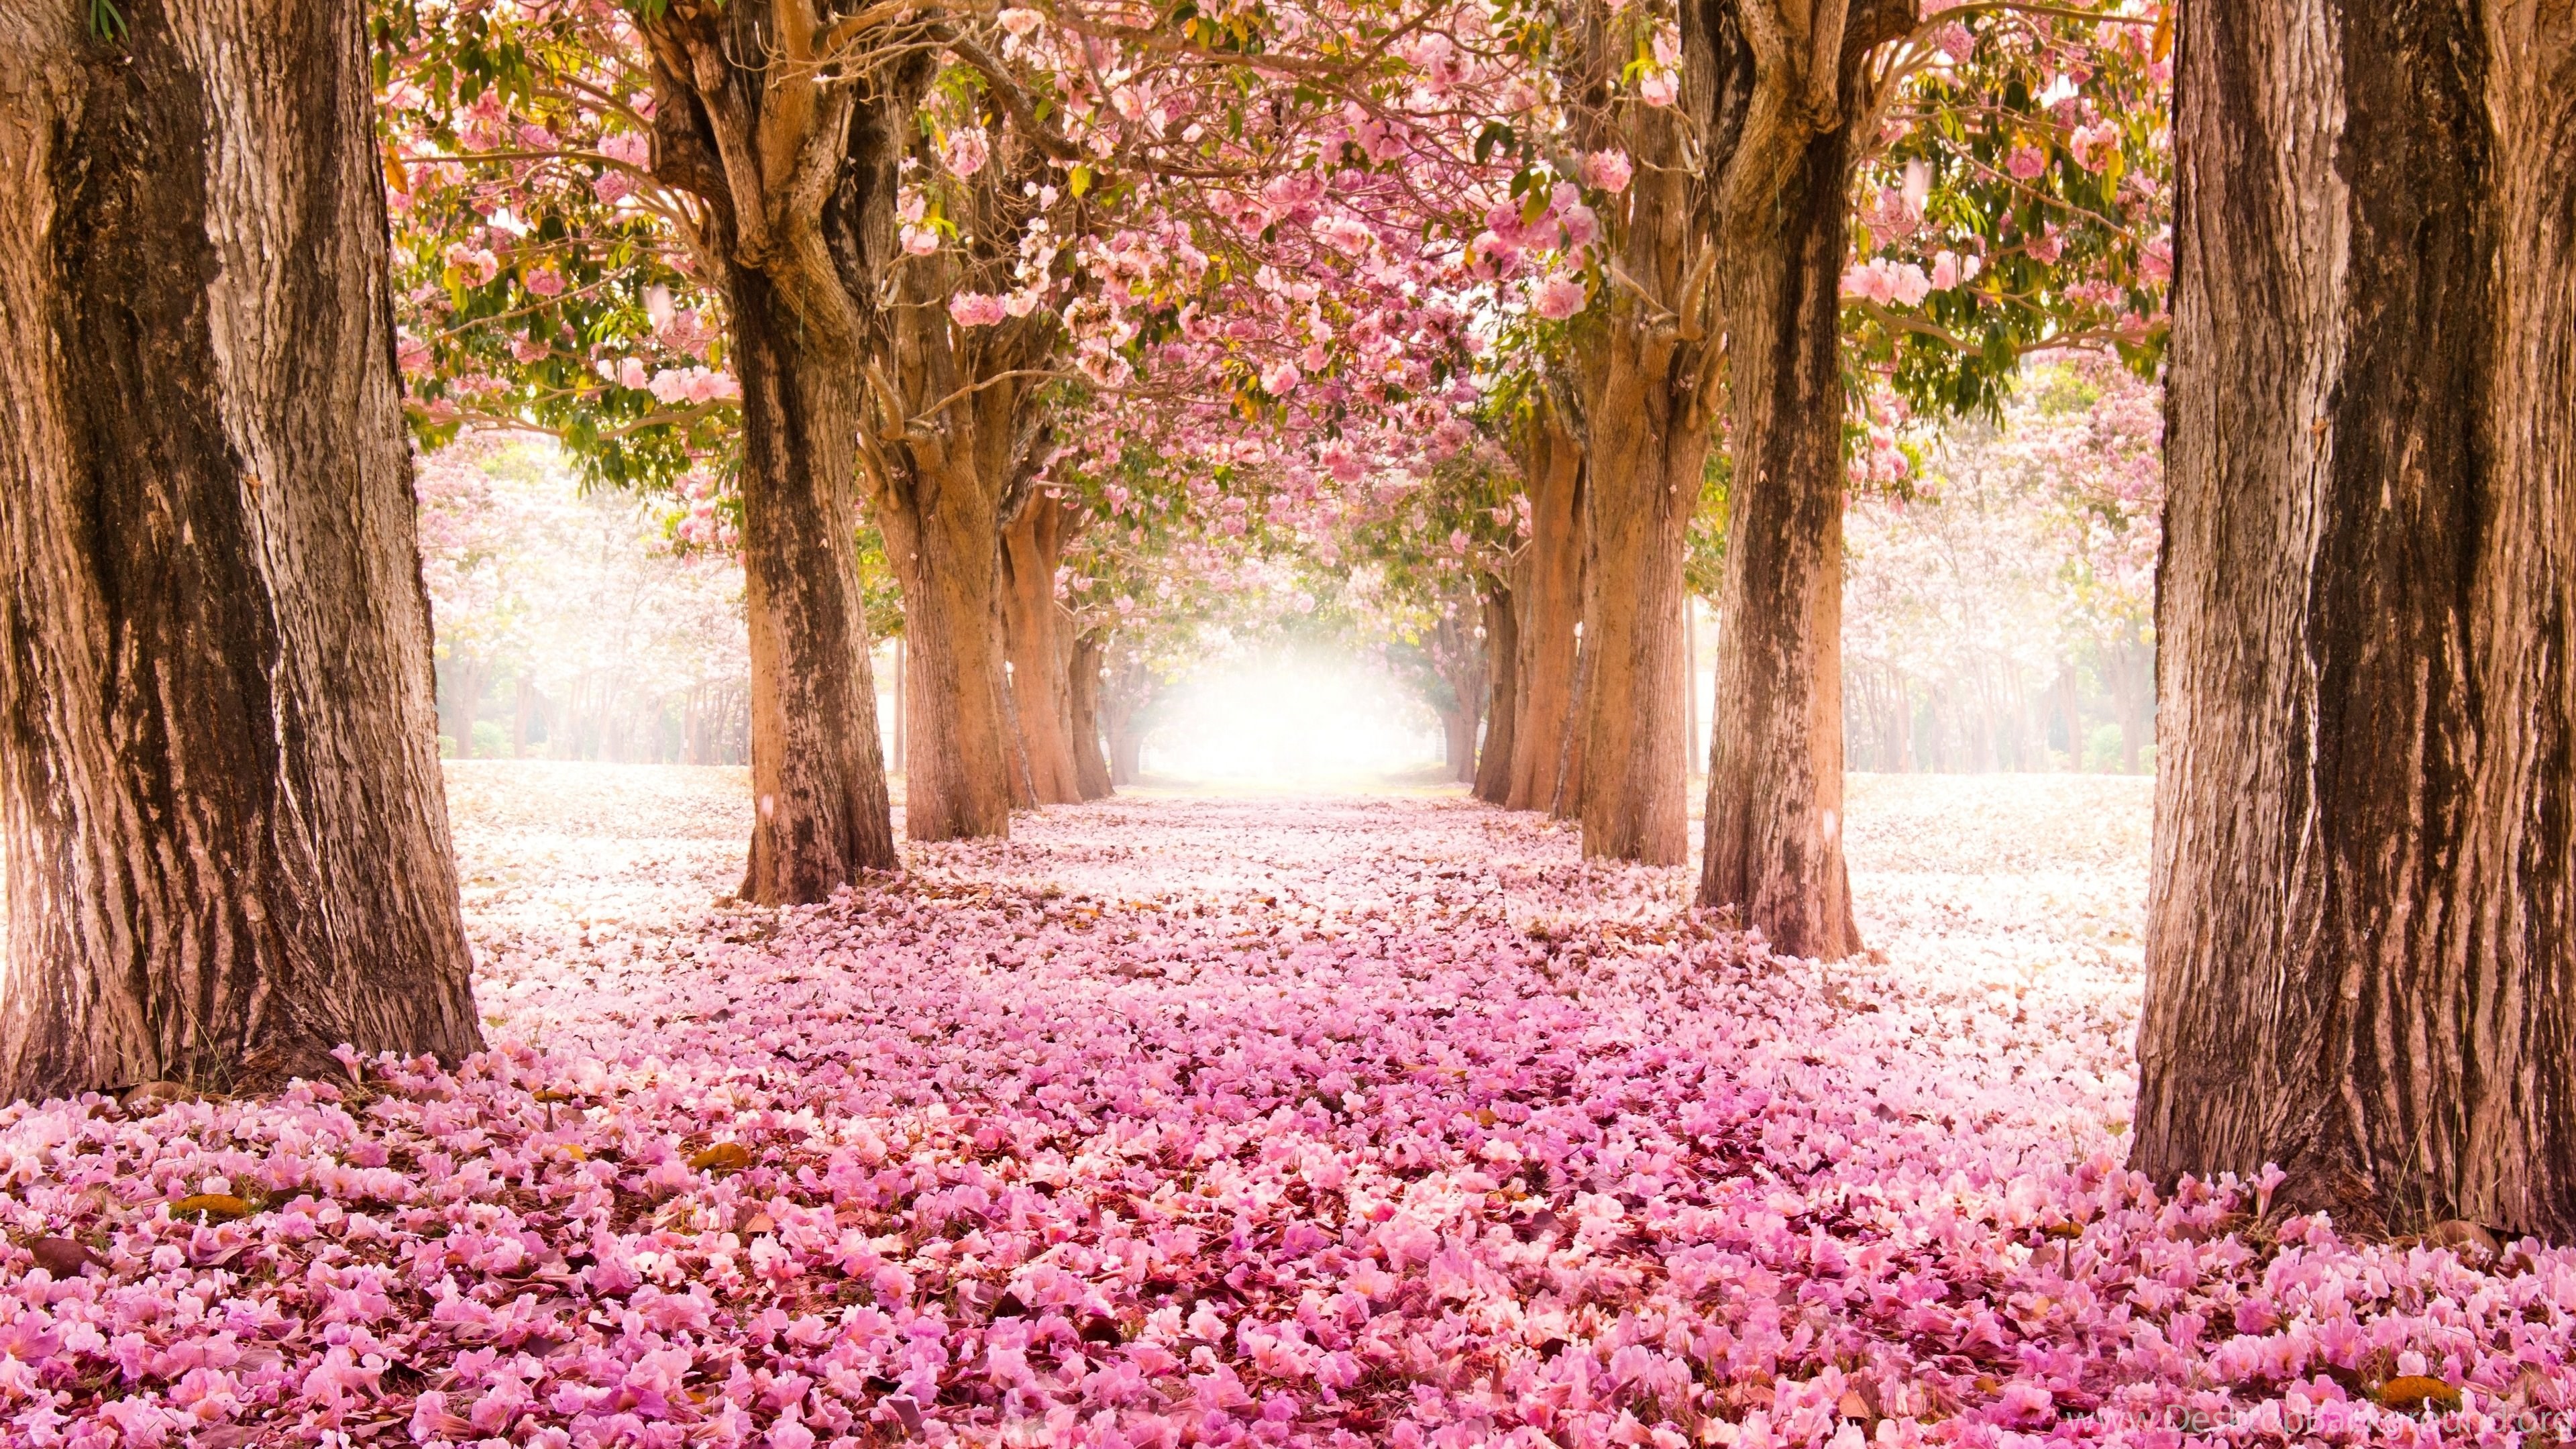 Spring In Japan Cherry Blossom 4k Ultra Hd Wallpapers For Desktop 3840x2160